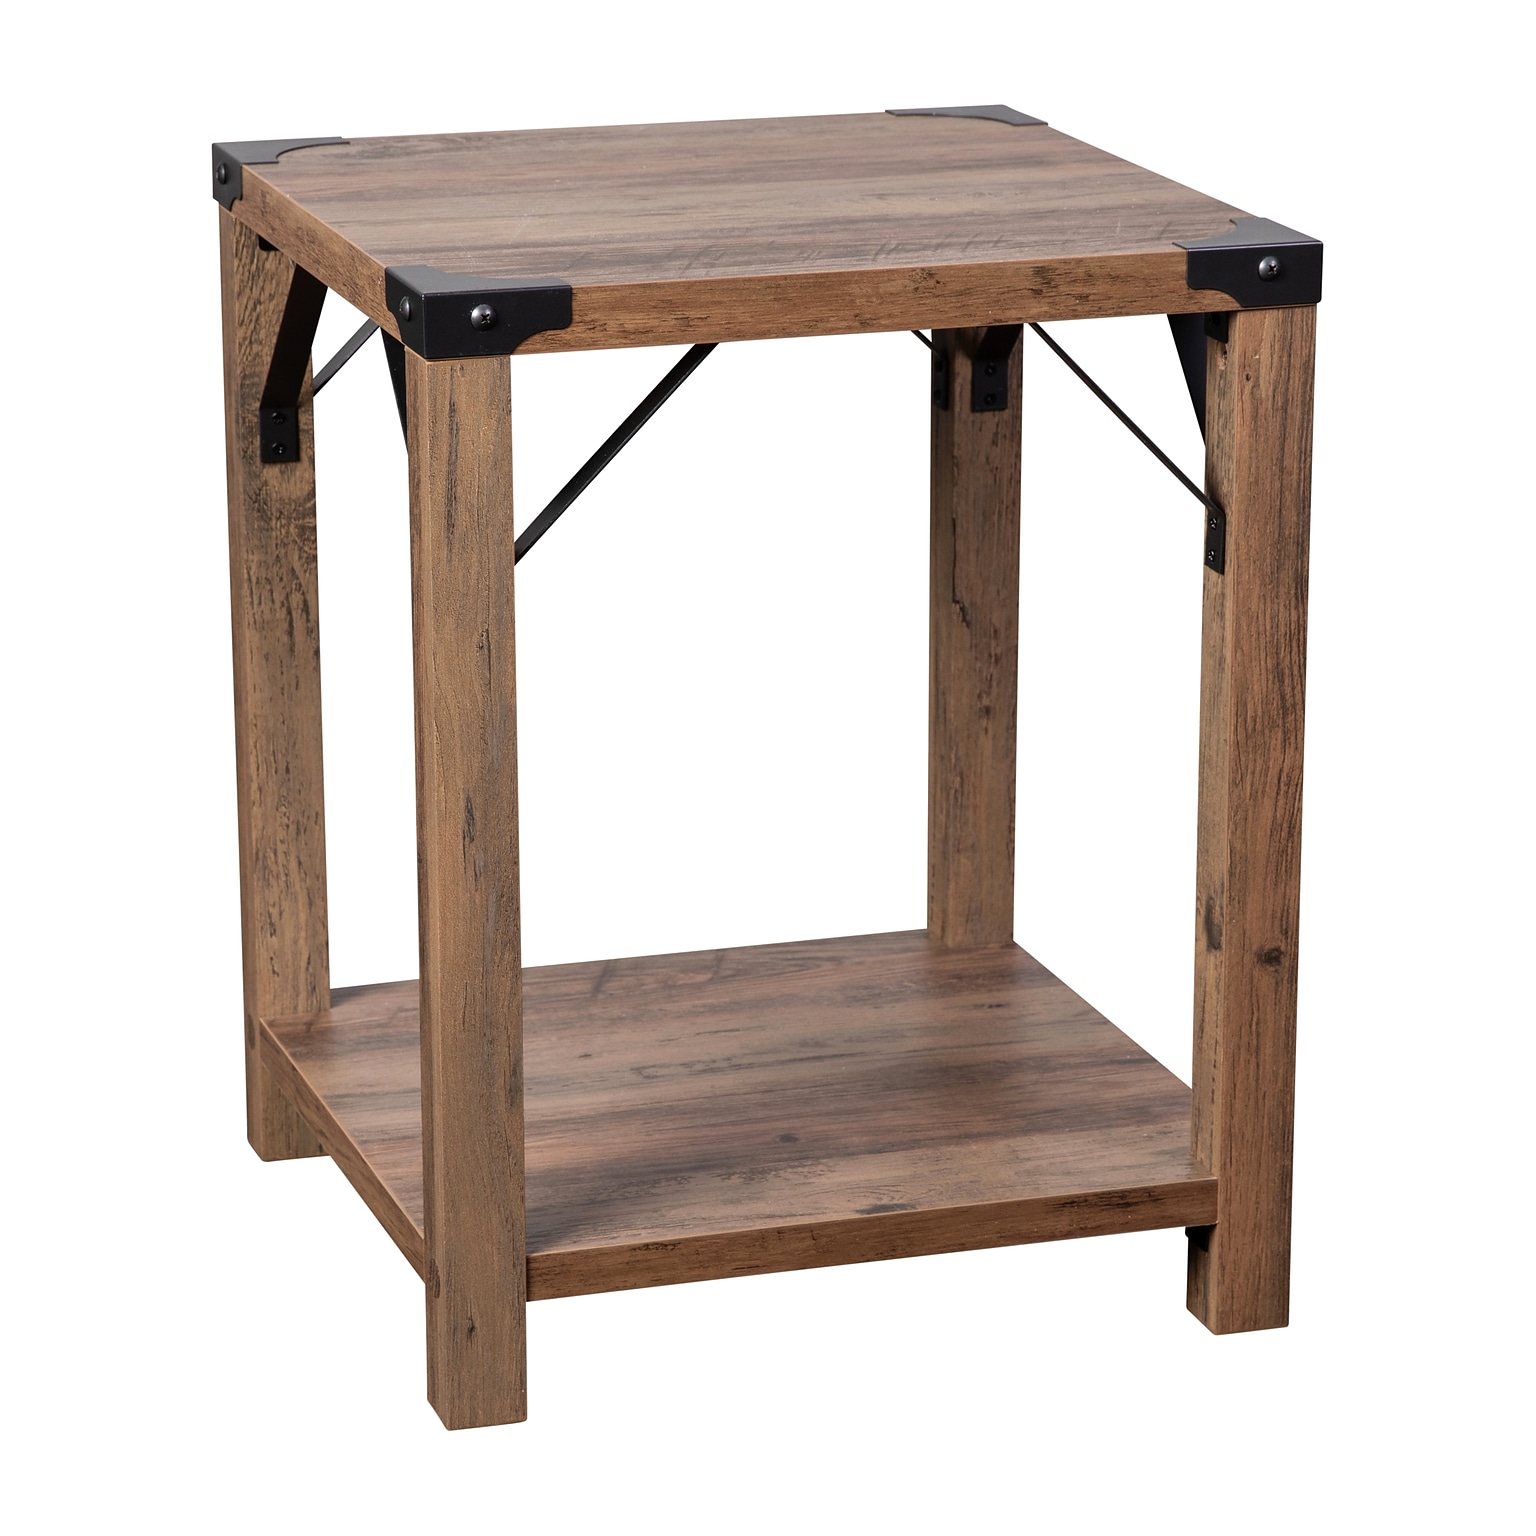 Flash Furniture Wyatt 17.5 x 17.5 2-Tier End Table, Rustic Oak (ZG036OAK)